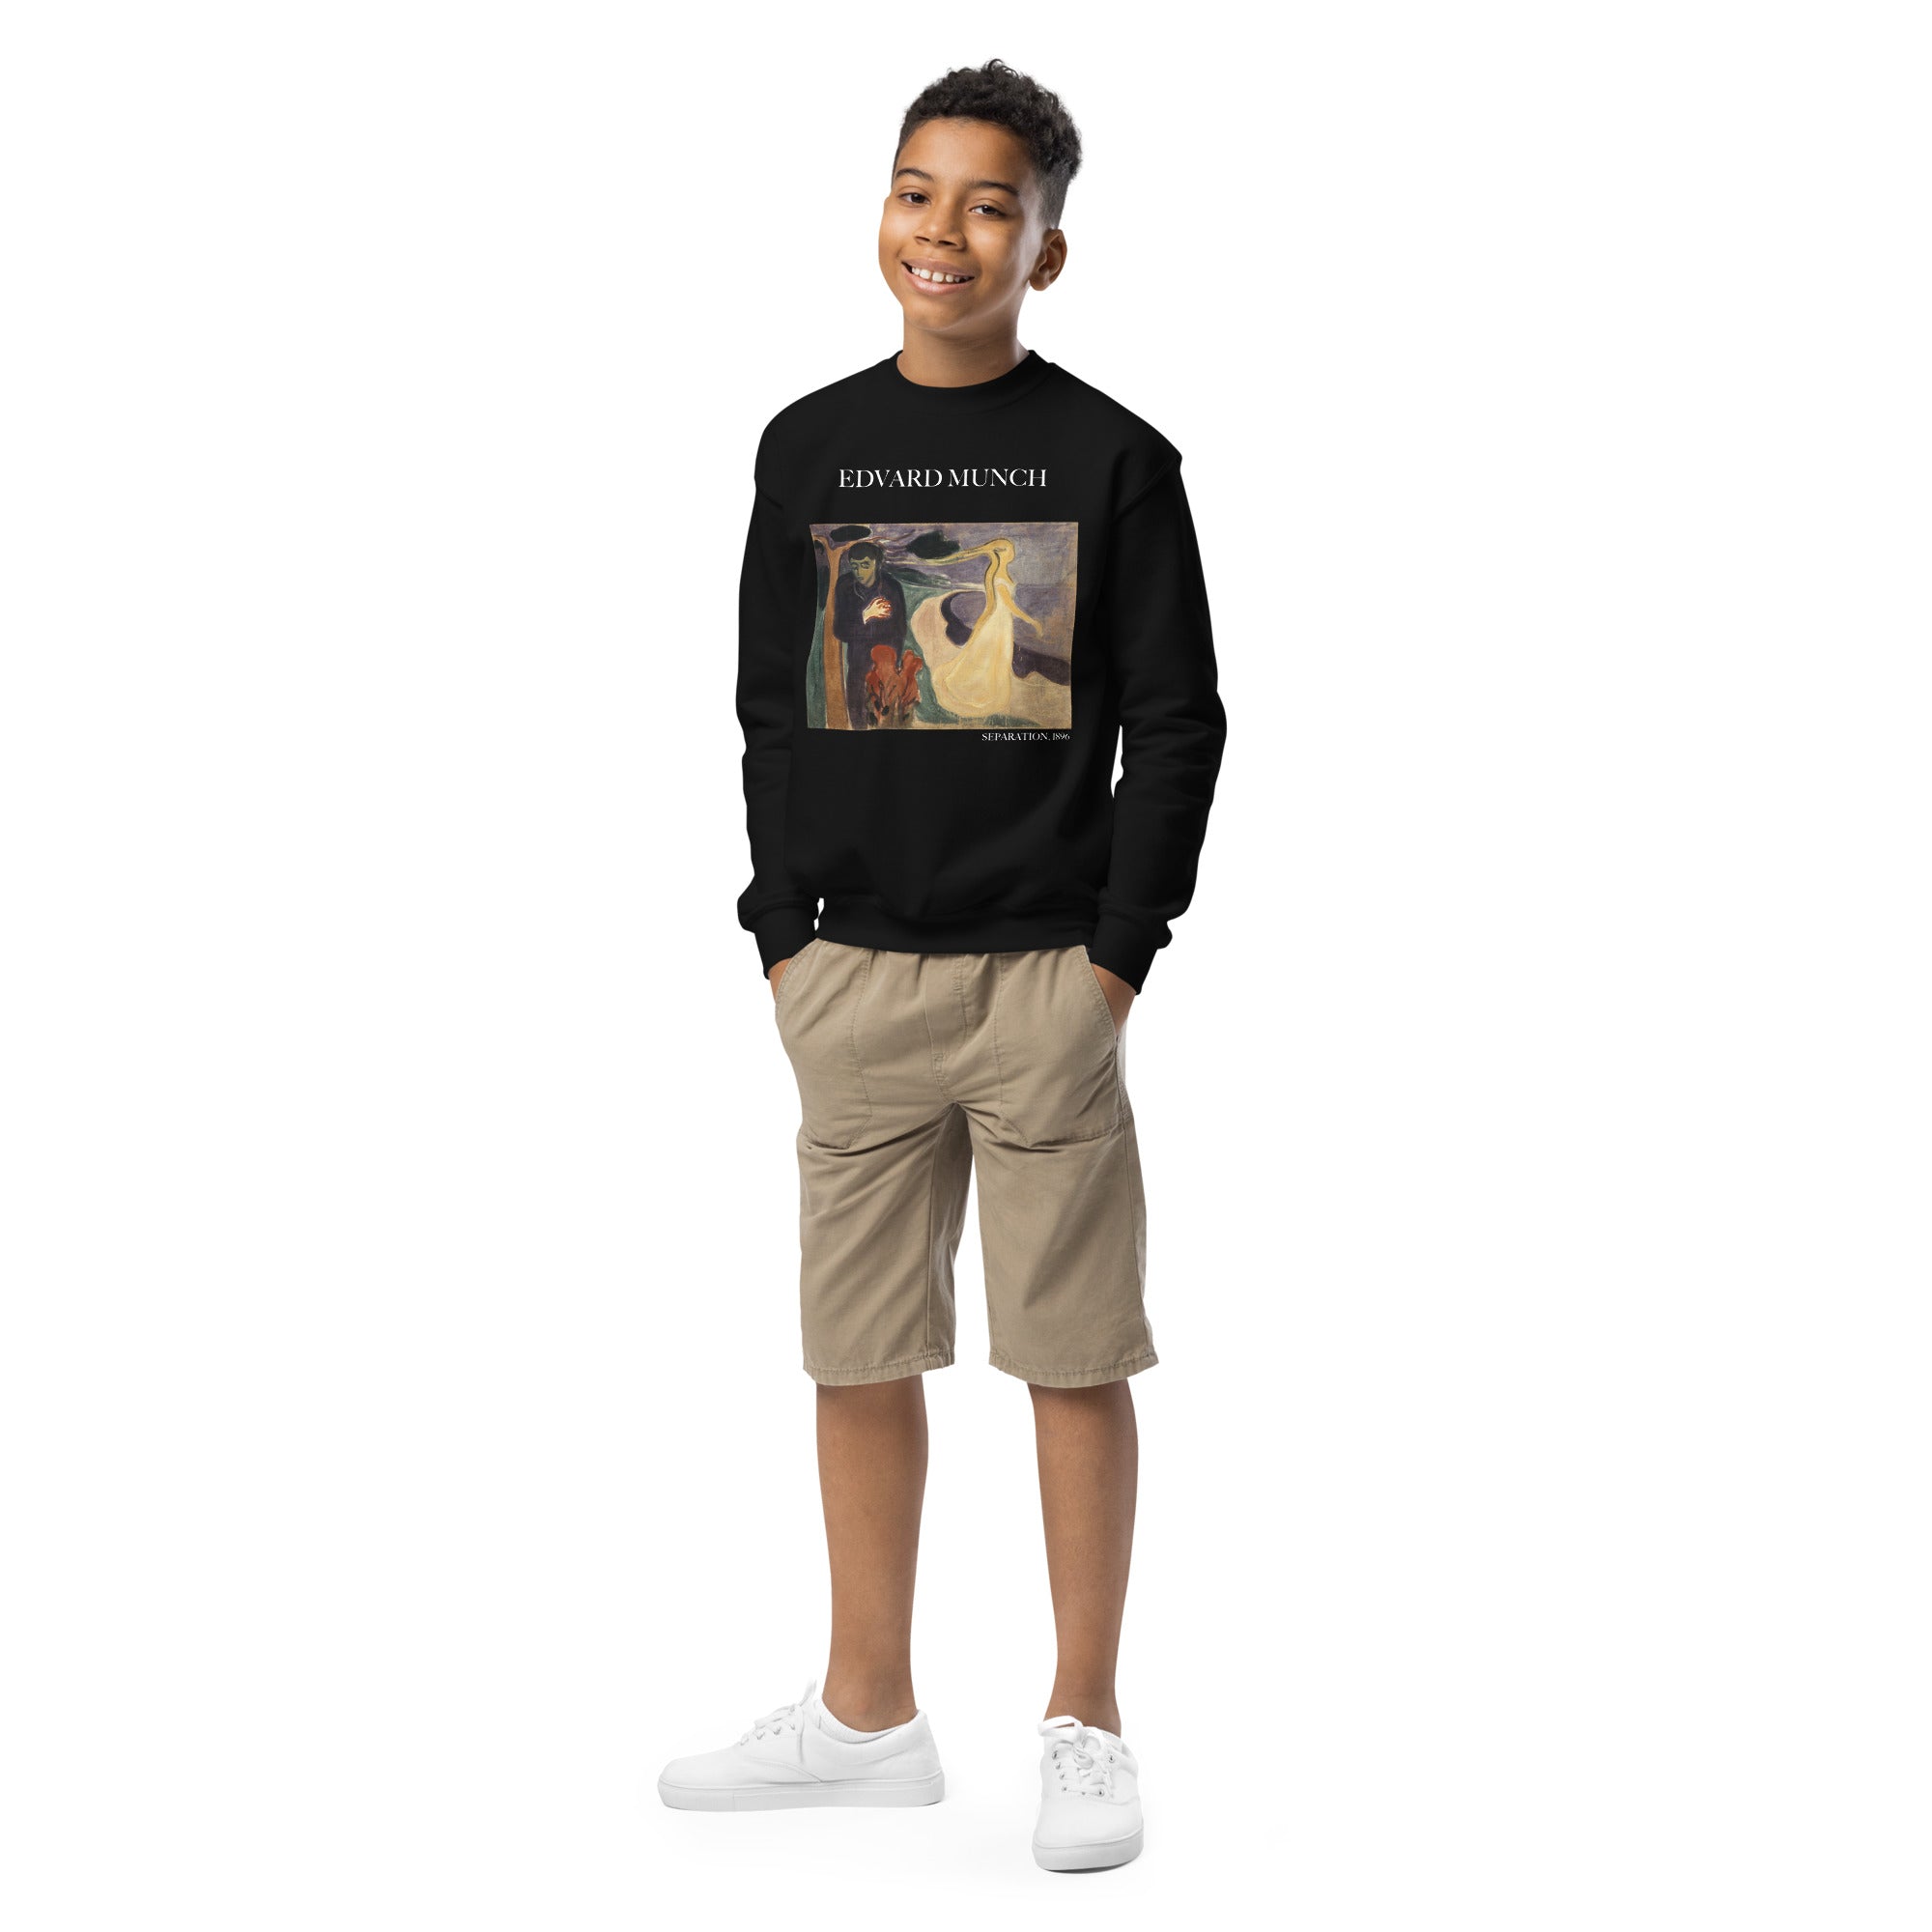 Edvard Munch 'Separation' Famous Painting Crewneck Sweatshirt | Premium Youth Art Sweatshirt